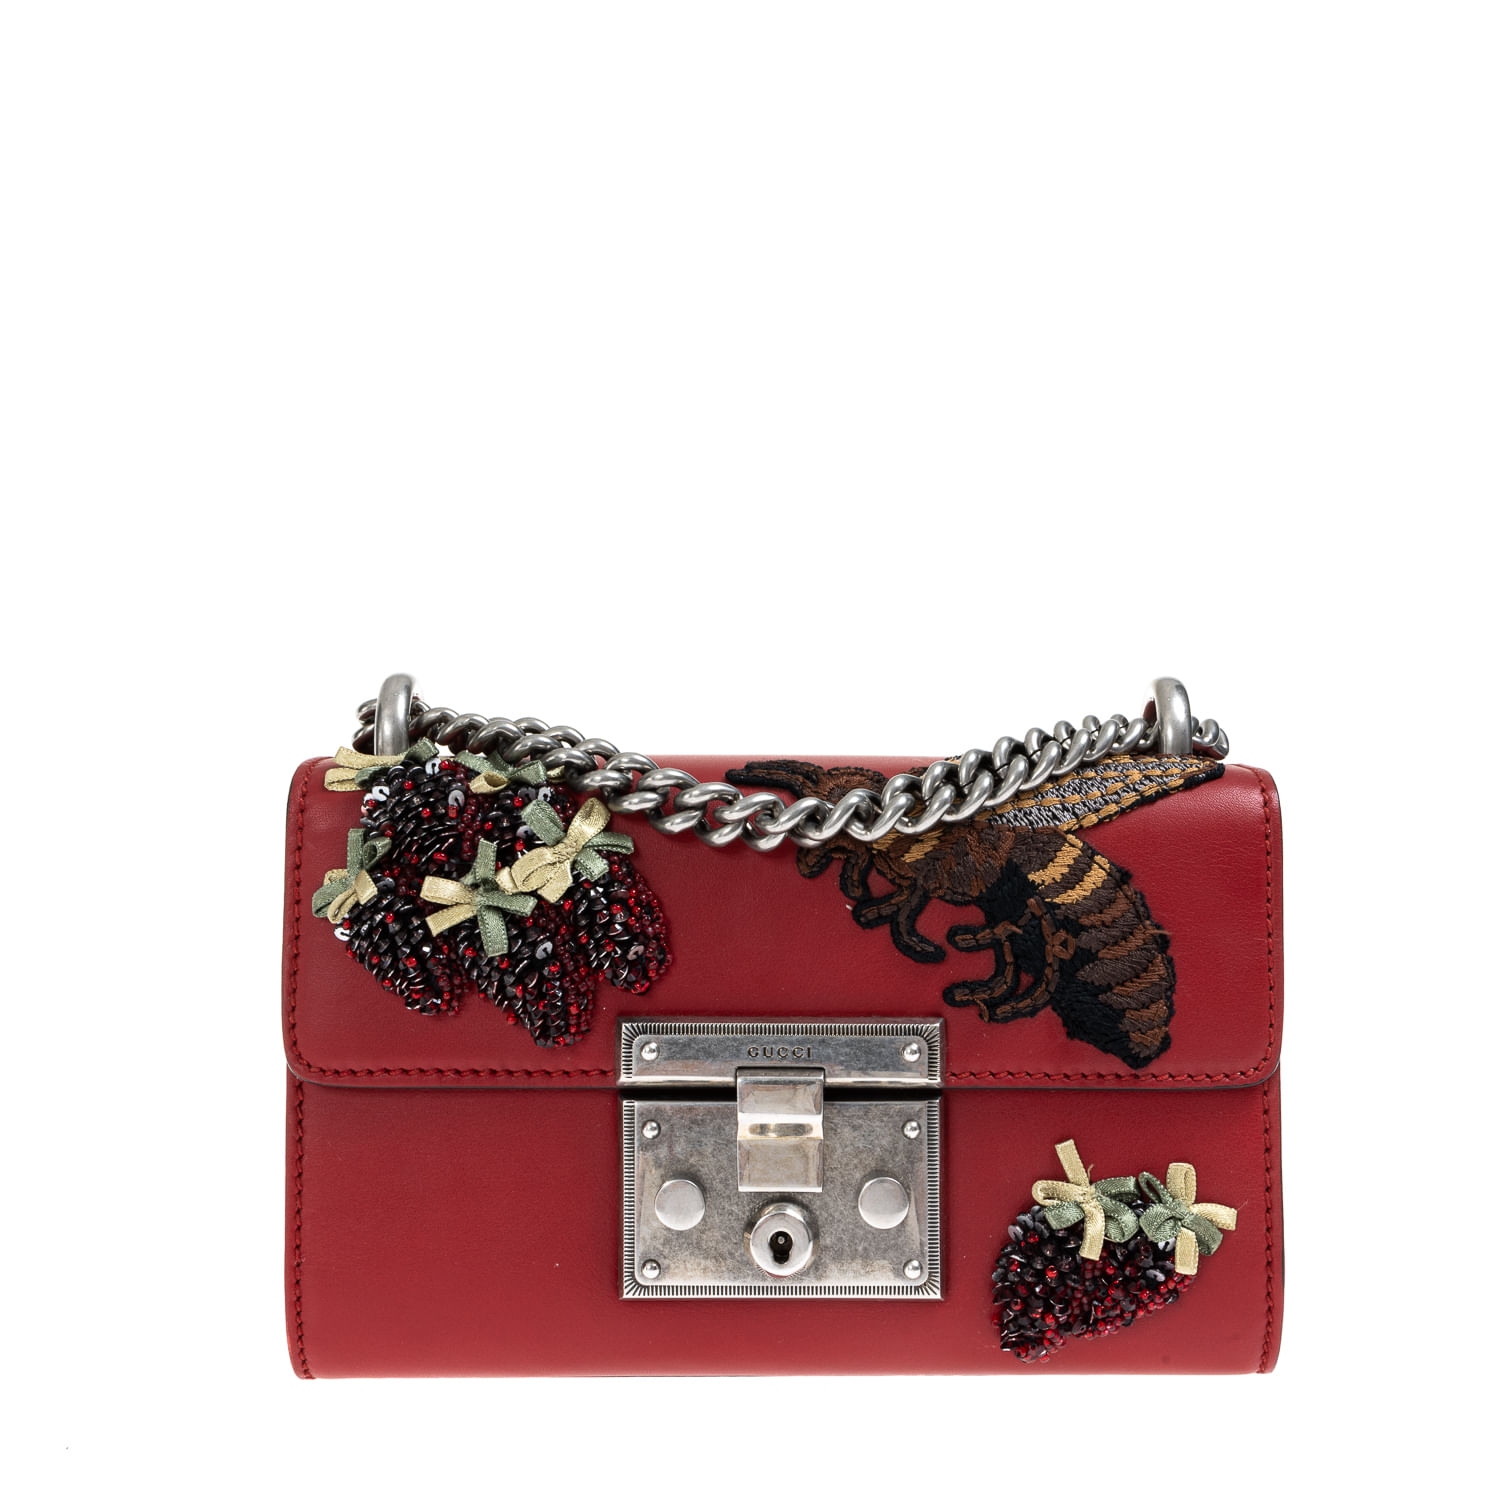 Bolsa Gucci Crystal Horsebit - Inffino, Brechó de Luxo Online